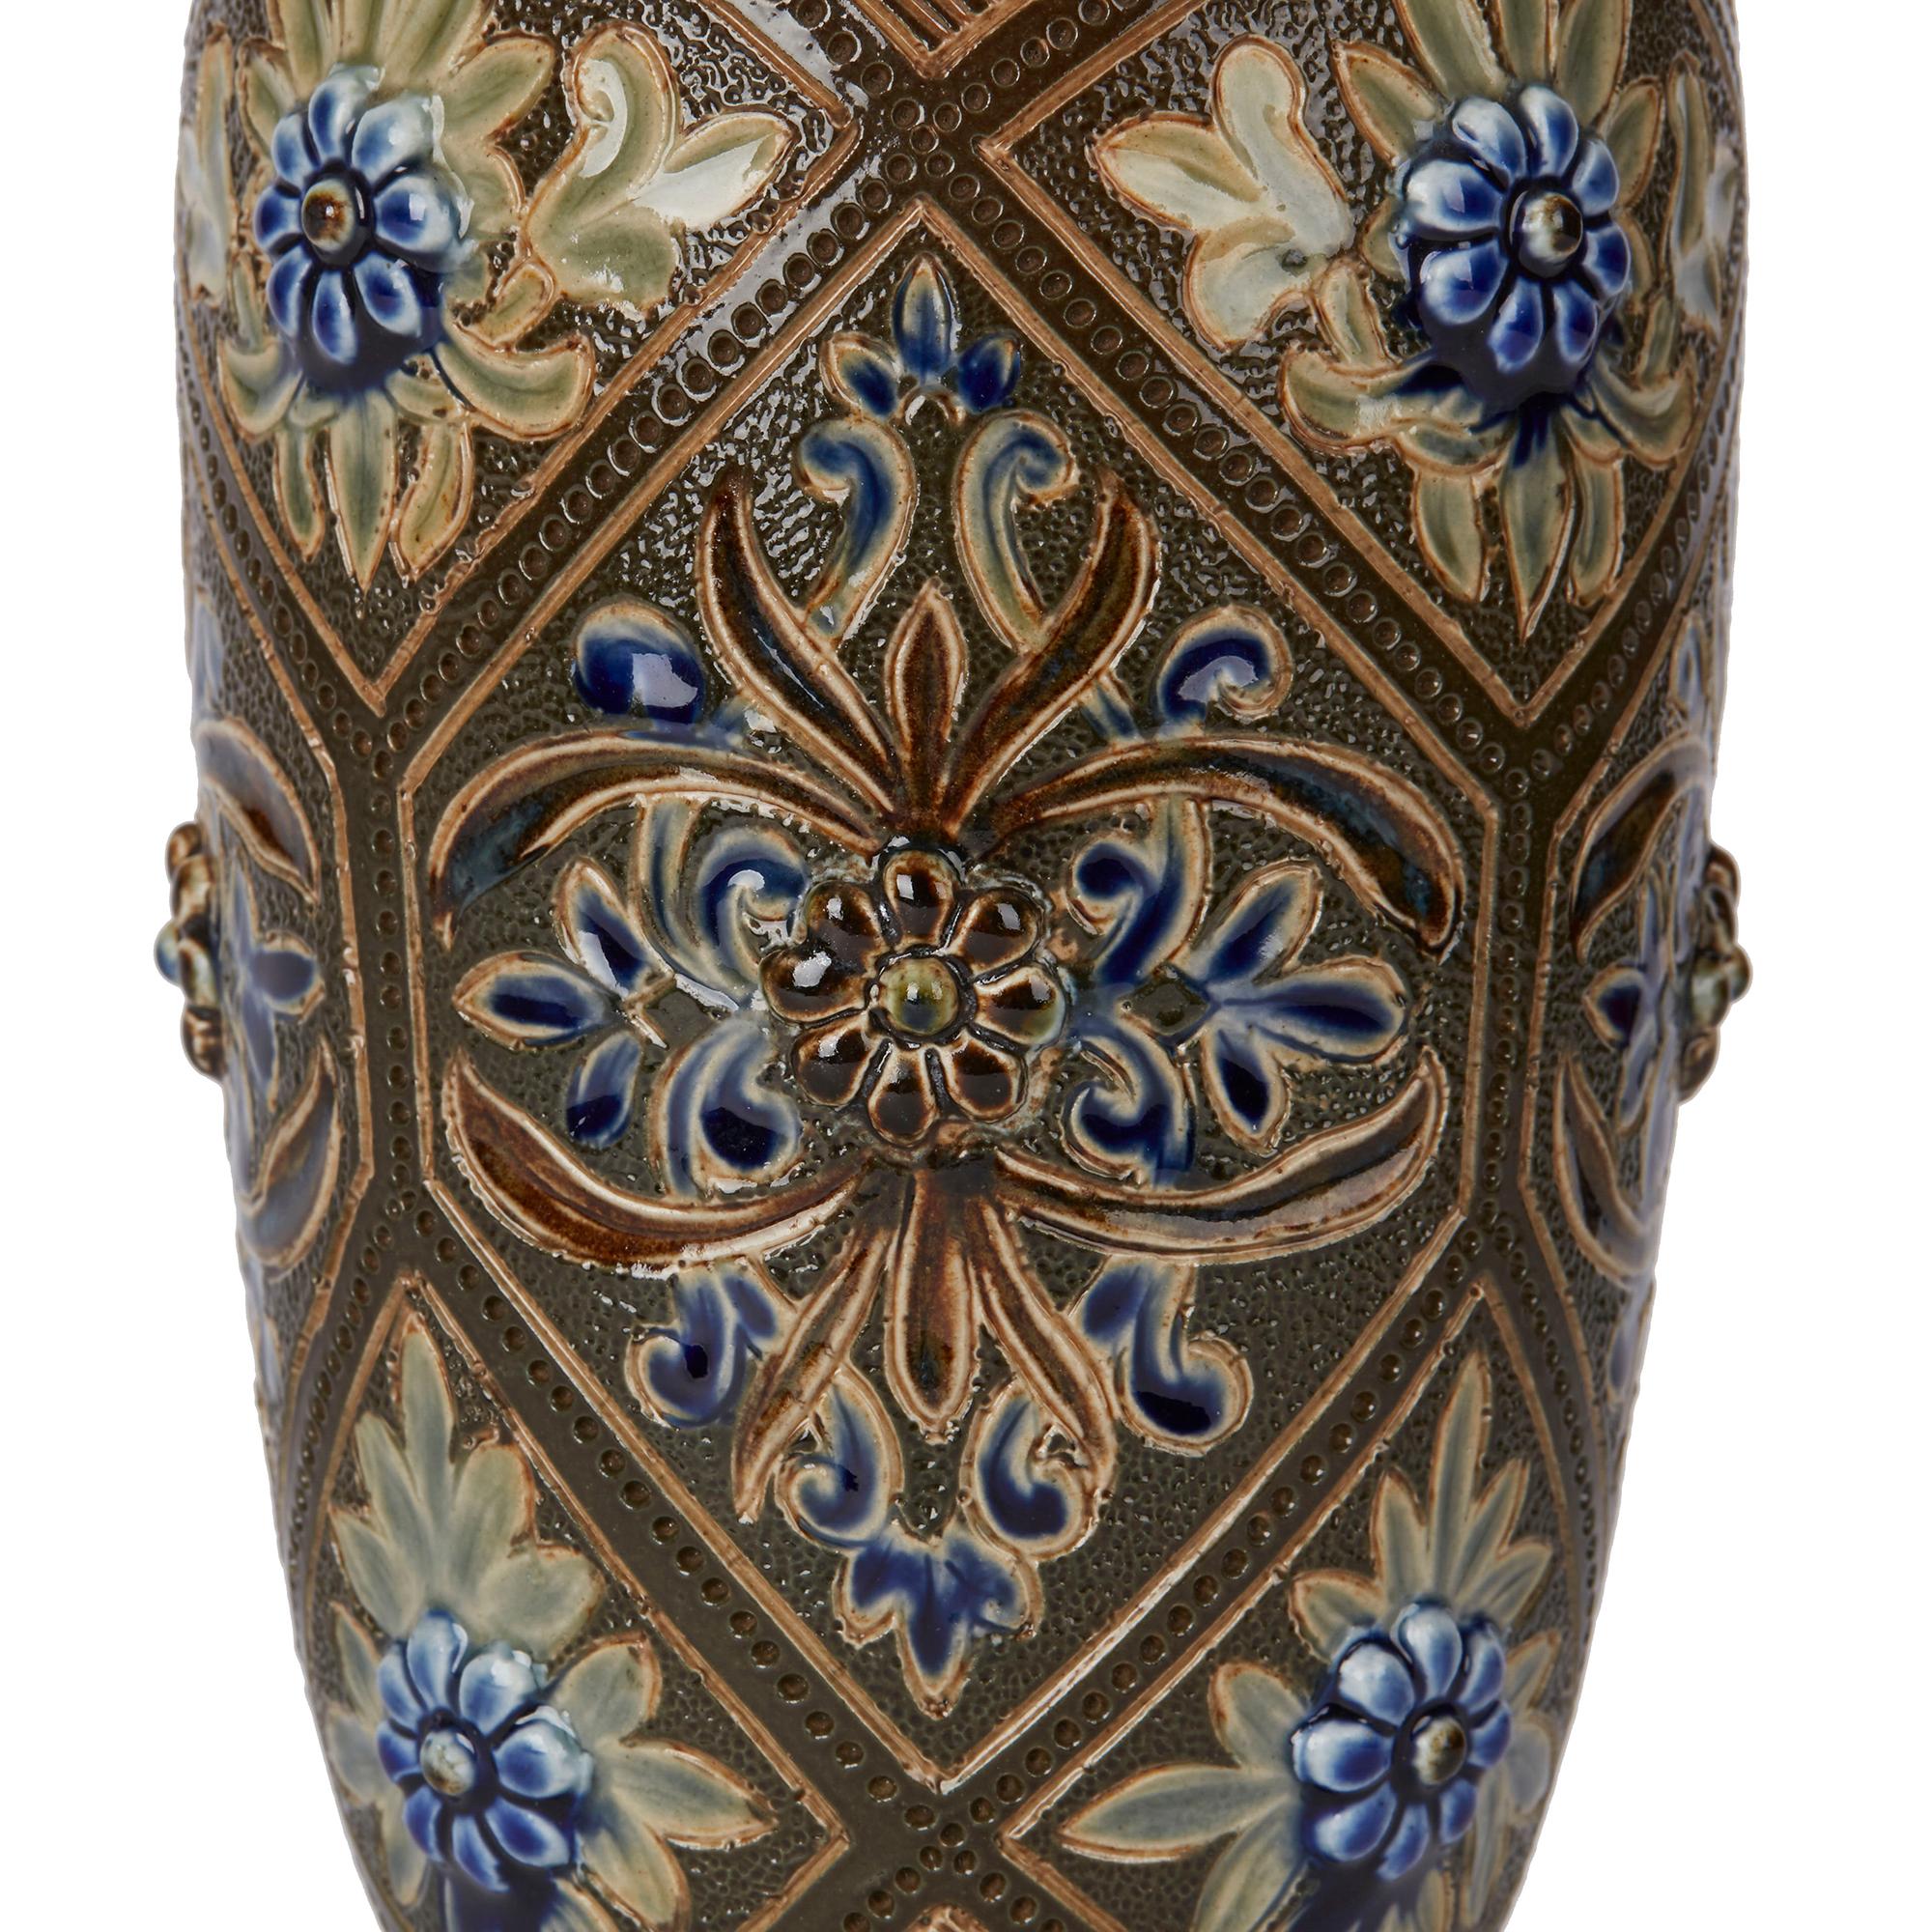 English Doulton Lambeth Art Pottery Vase by Frank Butler, 1882